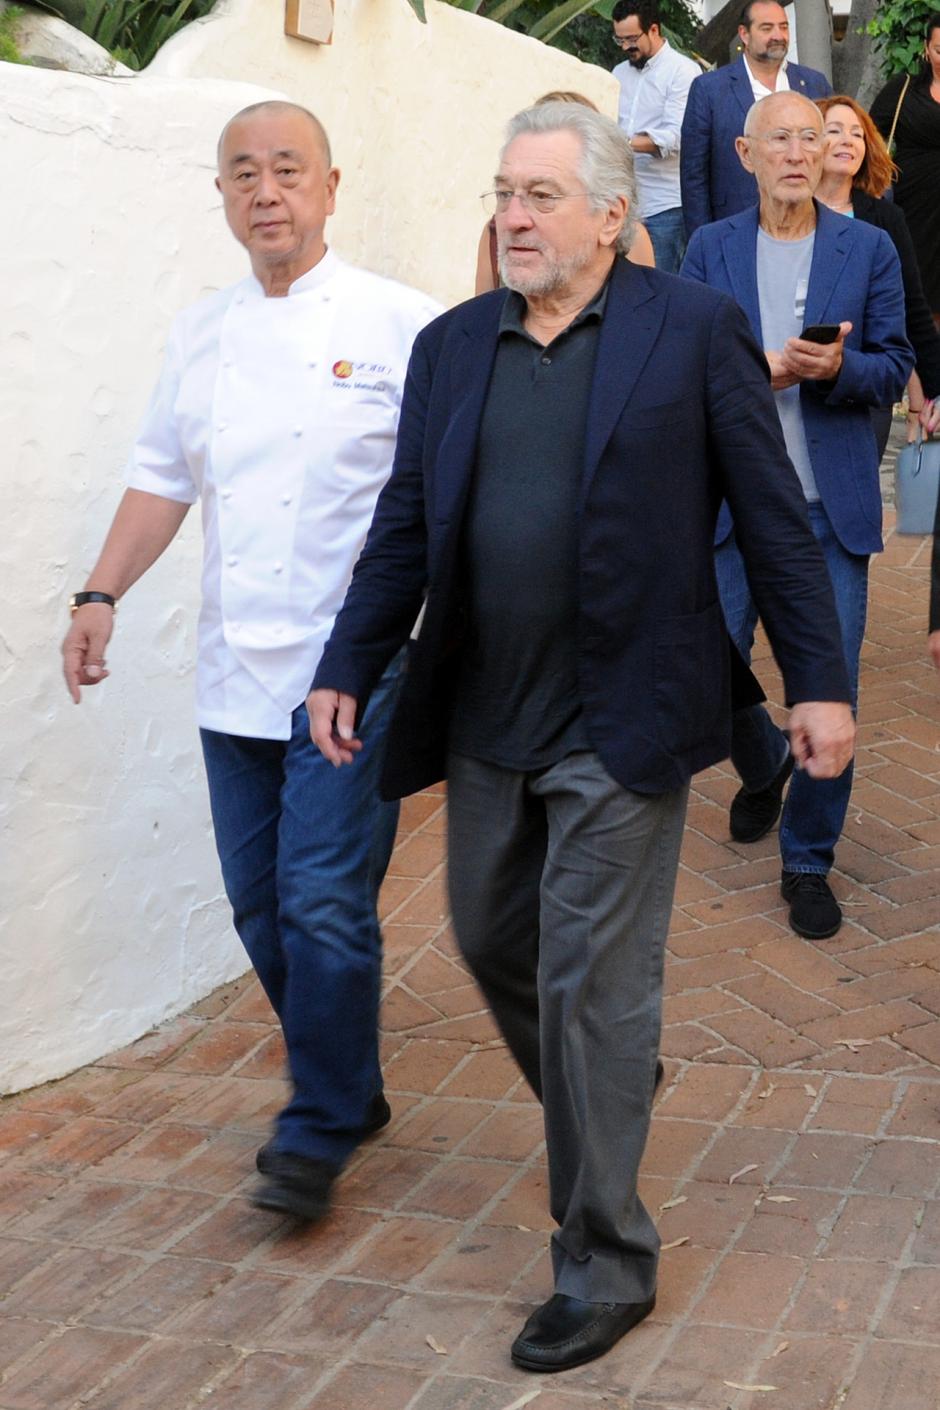 Actor Robert de Niro and chef Nobu Matsuhisa during the opening of " Nobuhotel " in Marbella on Wednesday , 16 May 2018